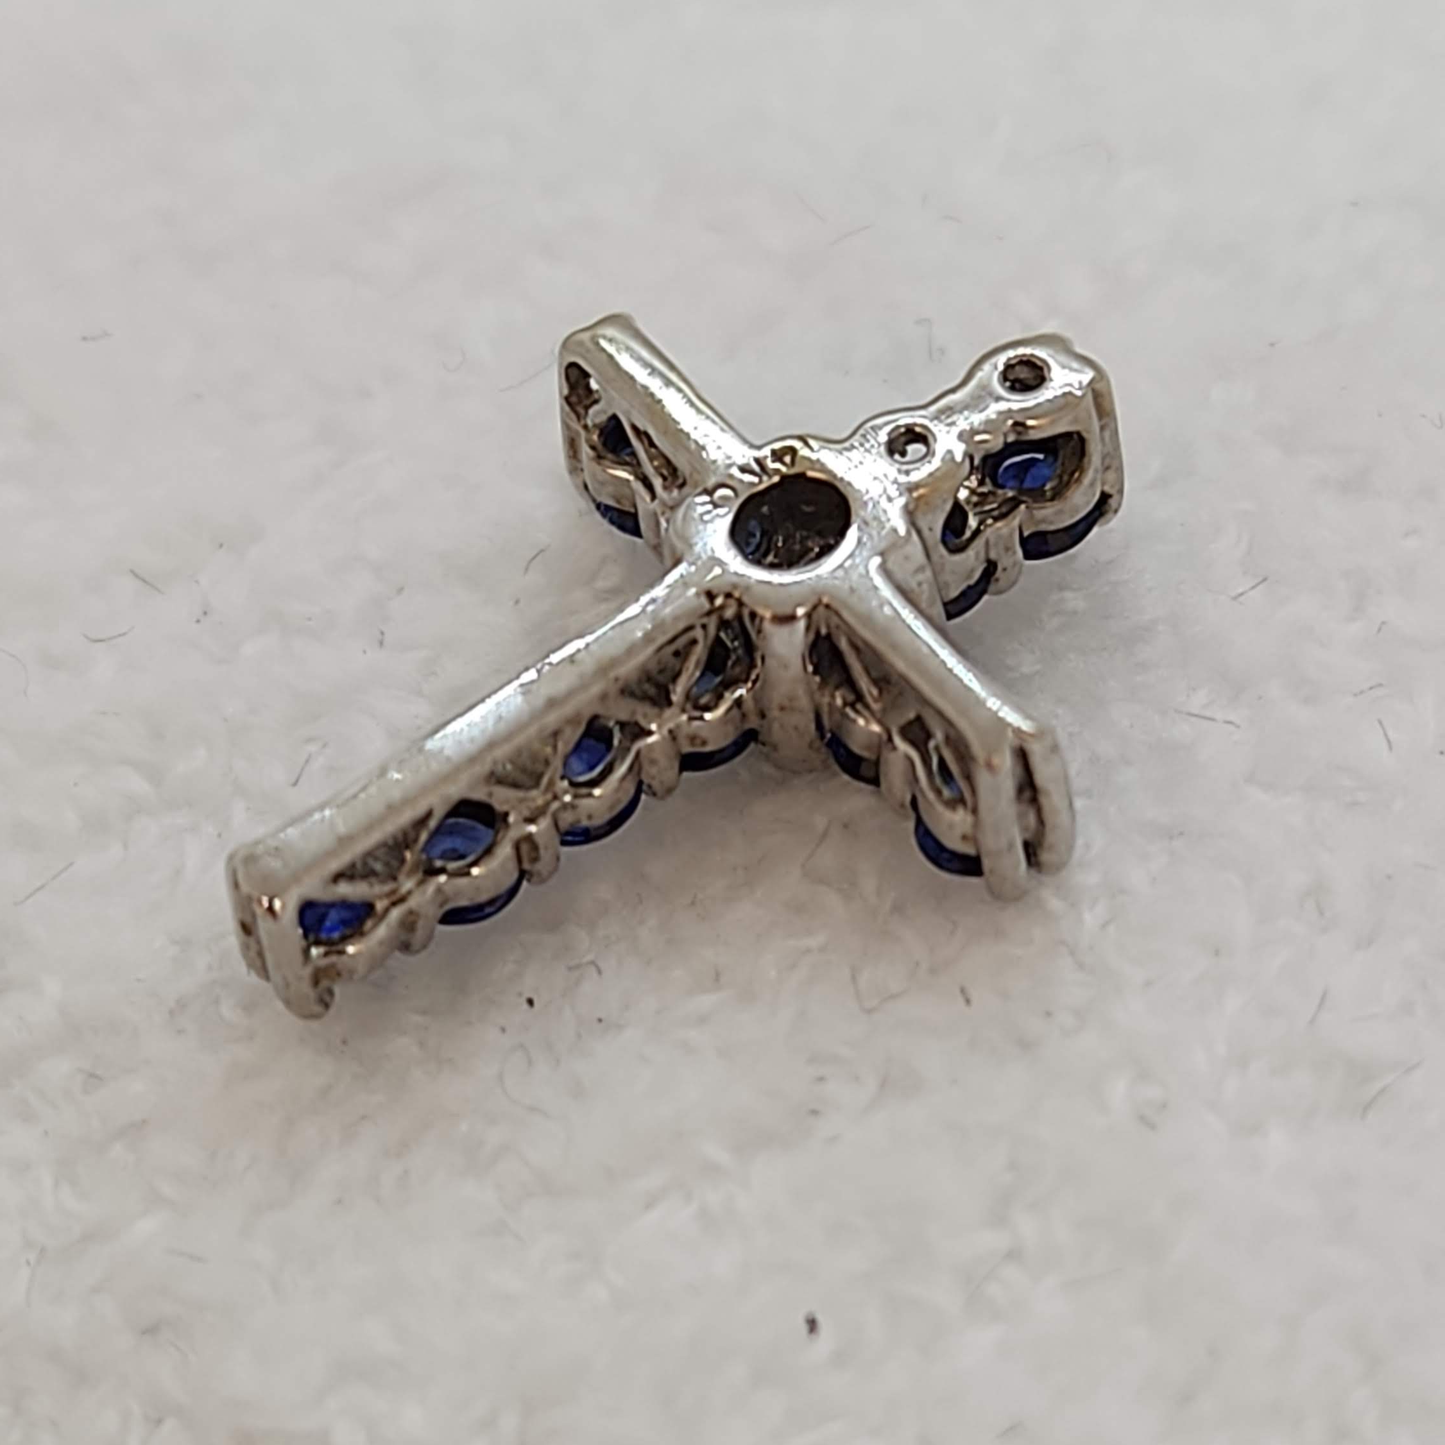 Sapphire and Diamond Cross Pendant